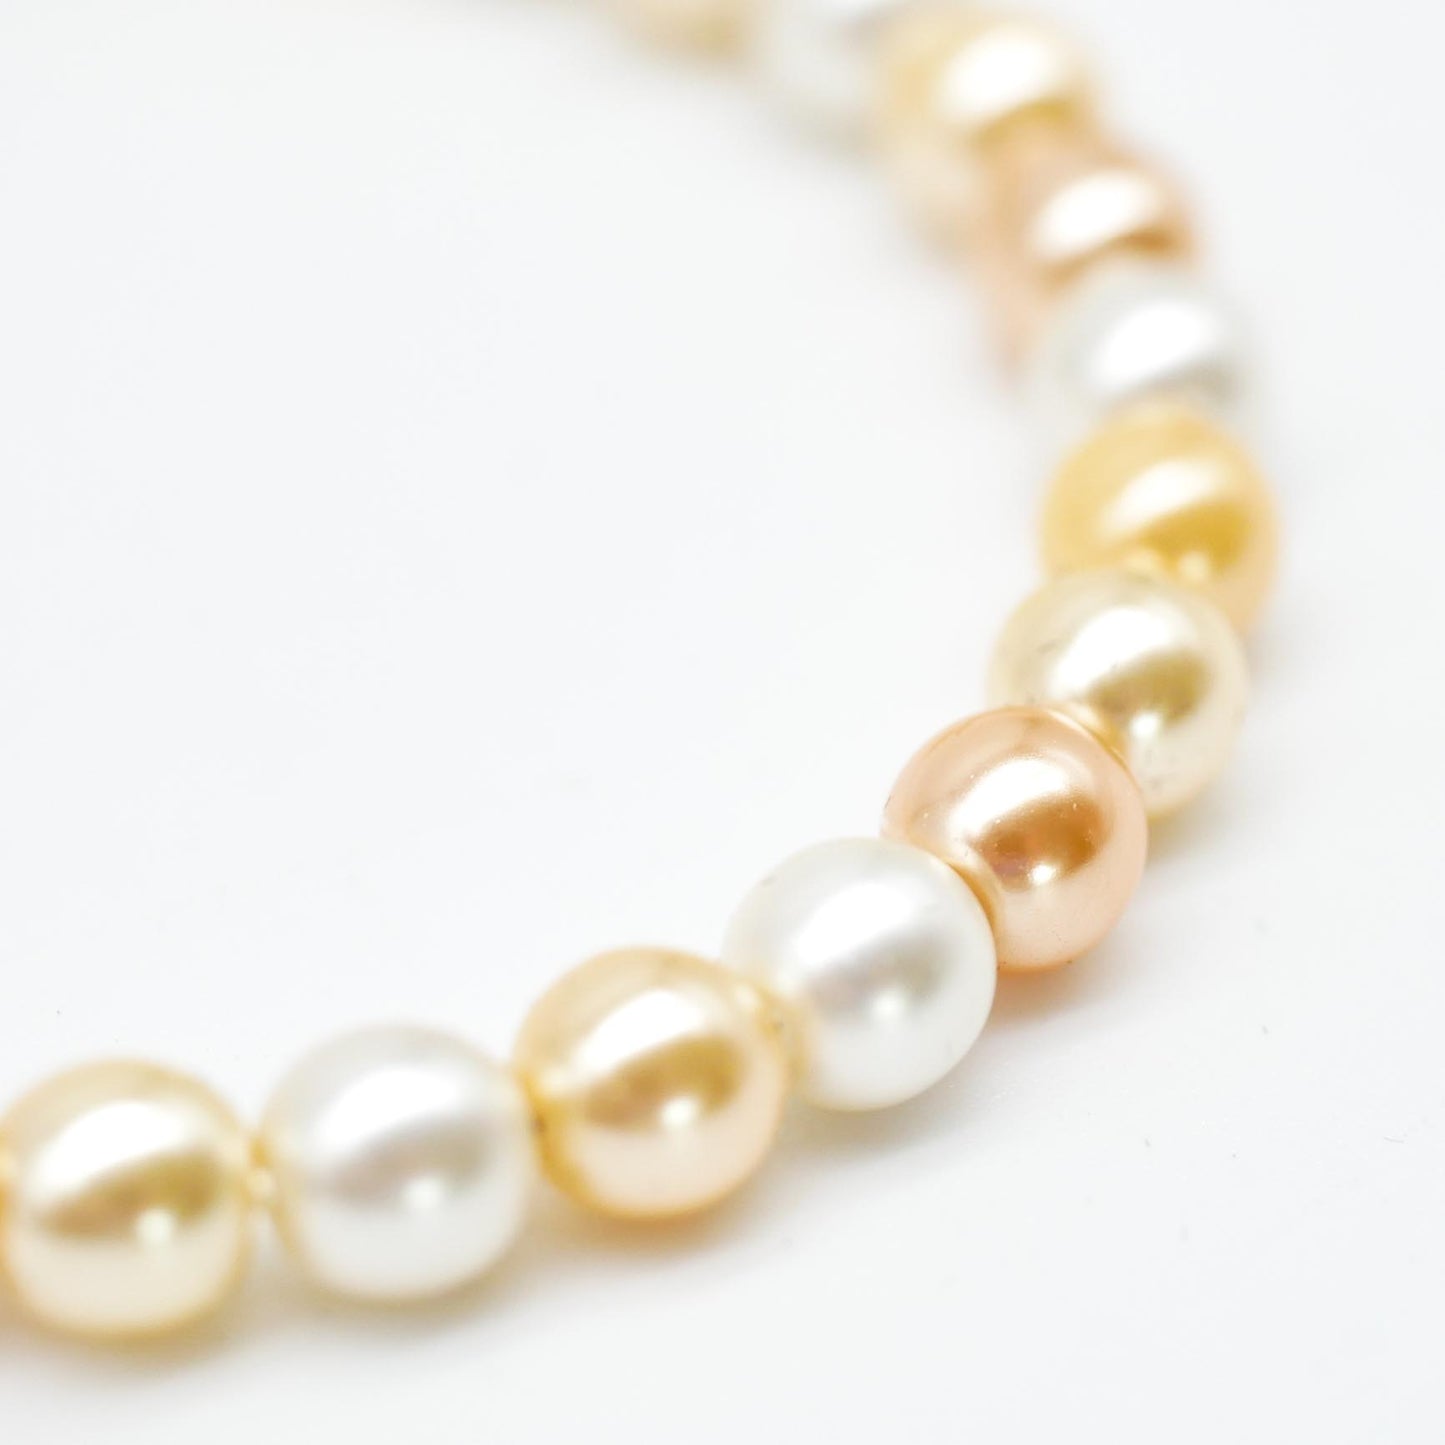 Armband Peachy Pearls